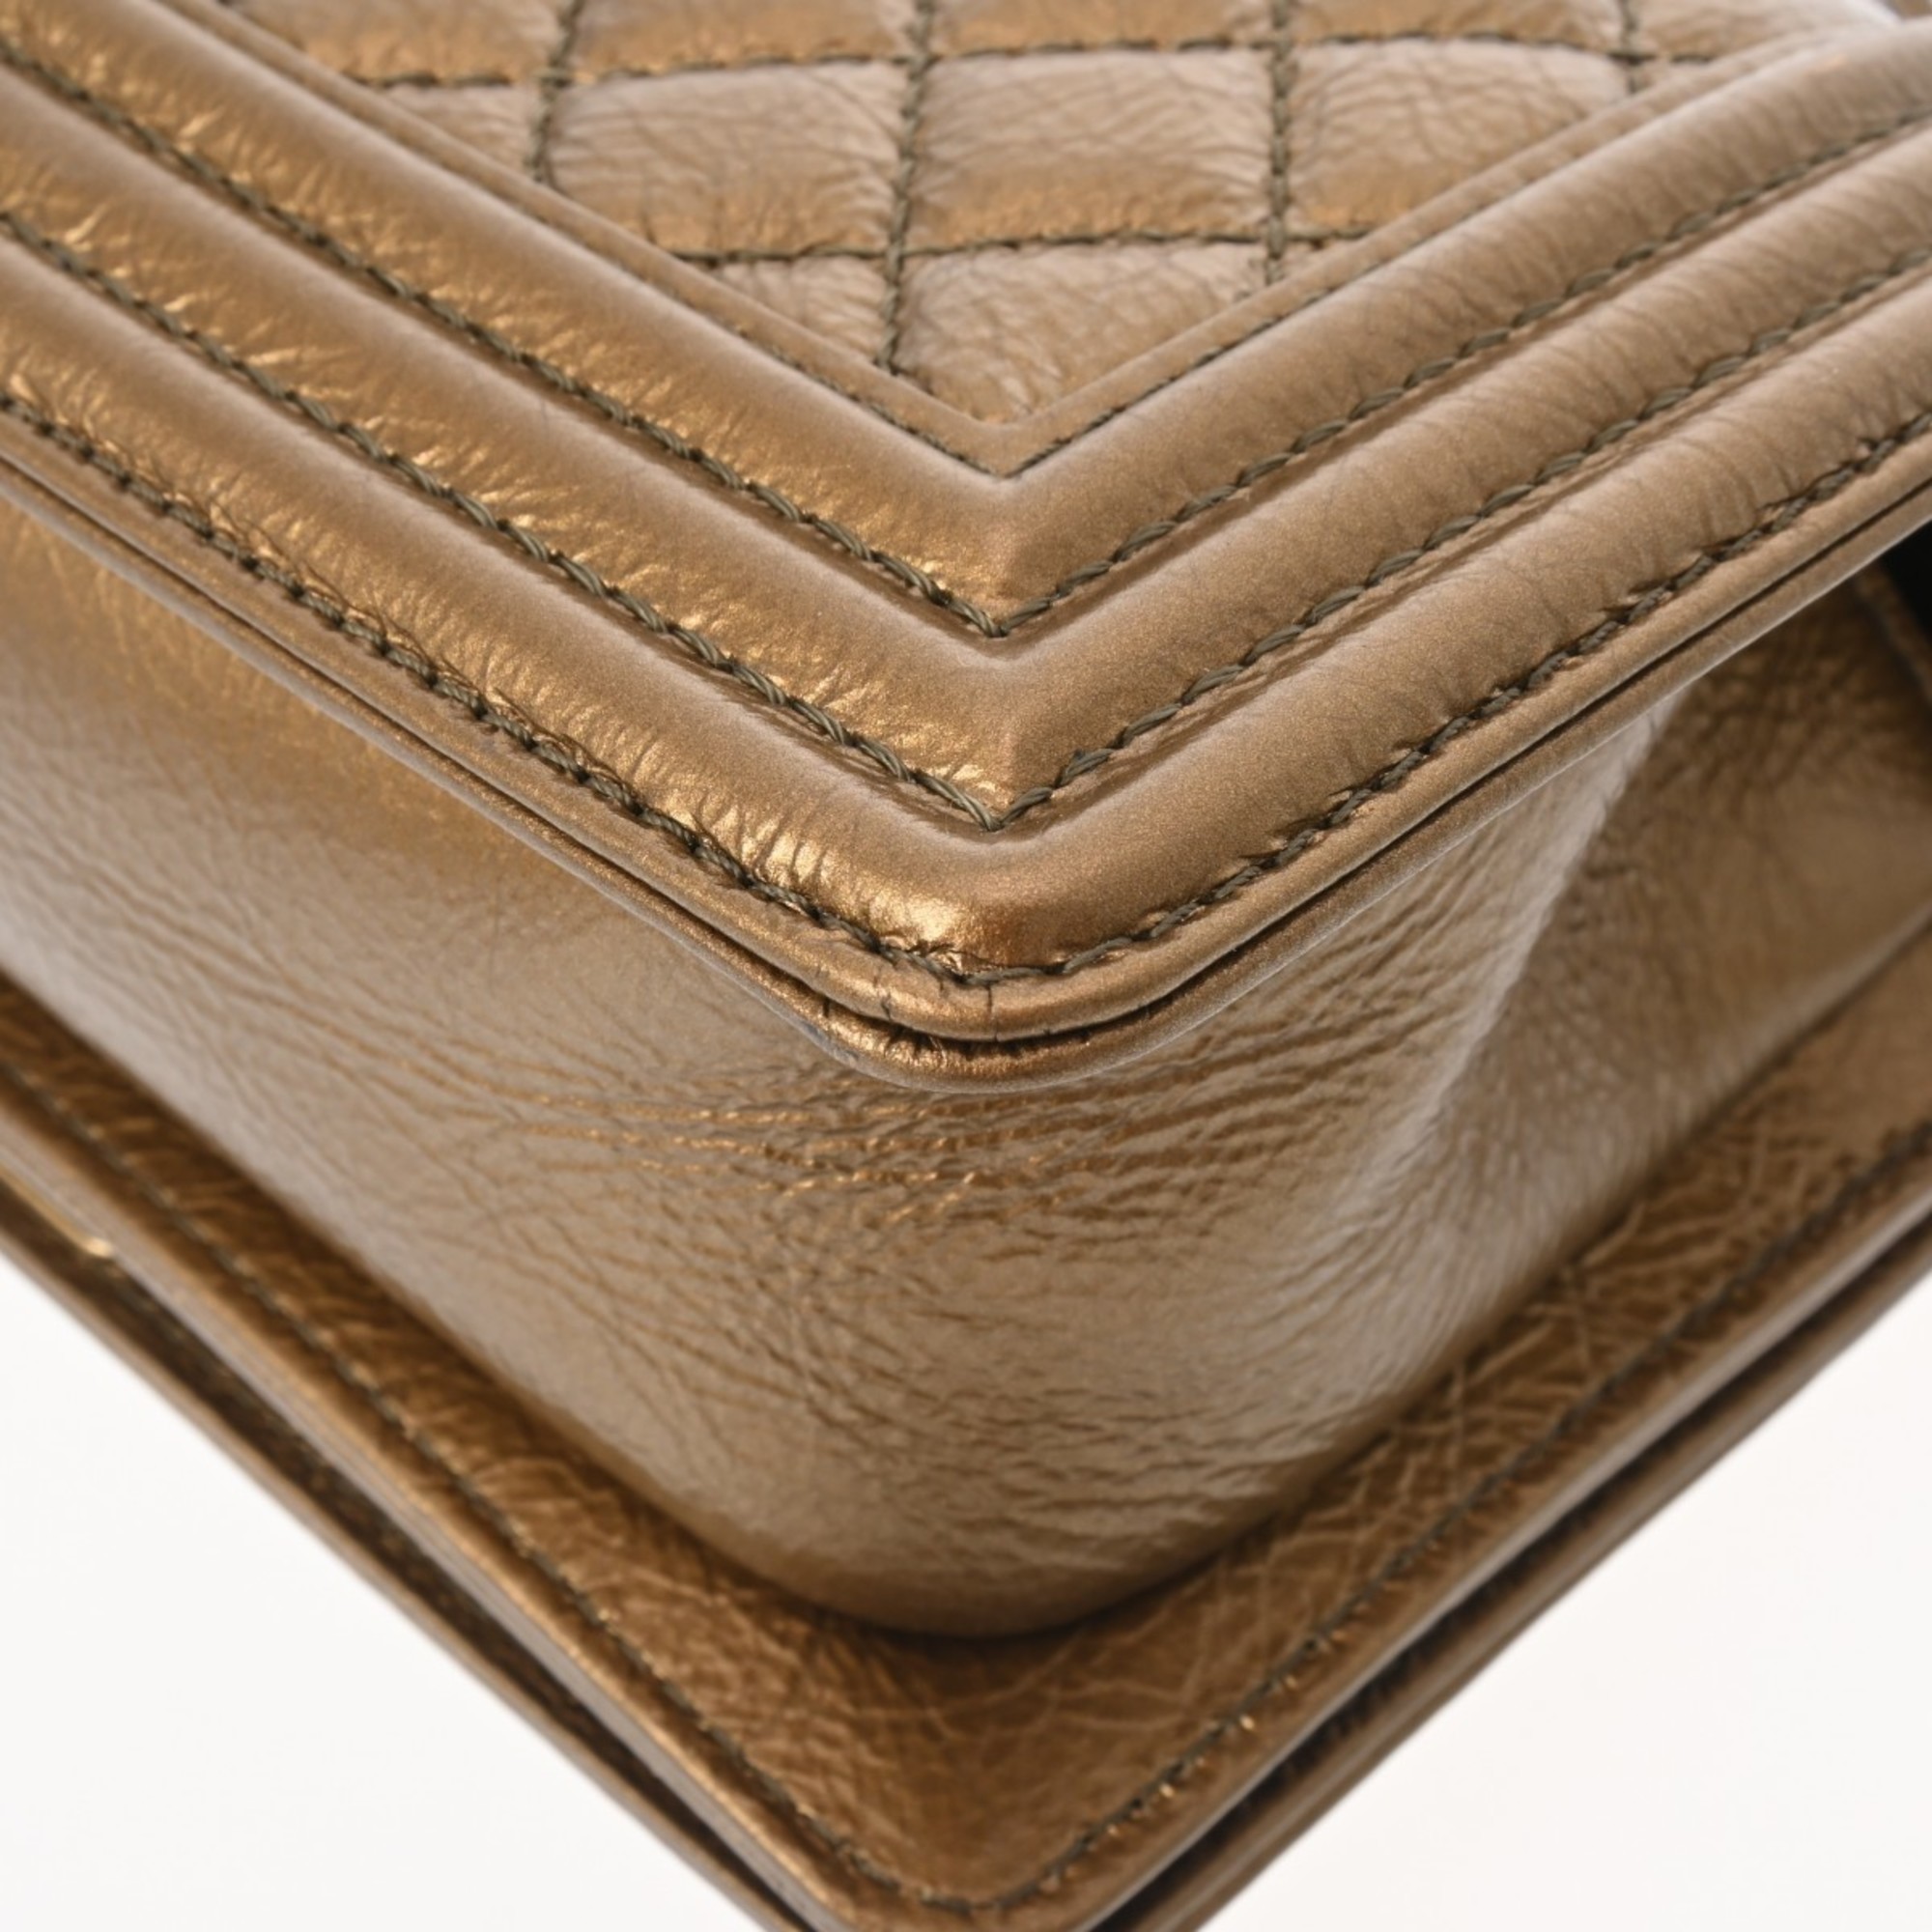 CHANEL Boy Chanel Chain Shoulder 20cm Bronze Tone A67085 Women's Leather Bag